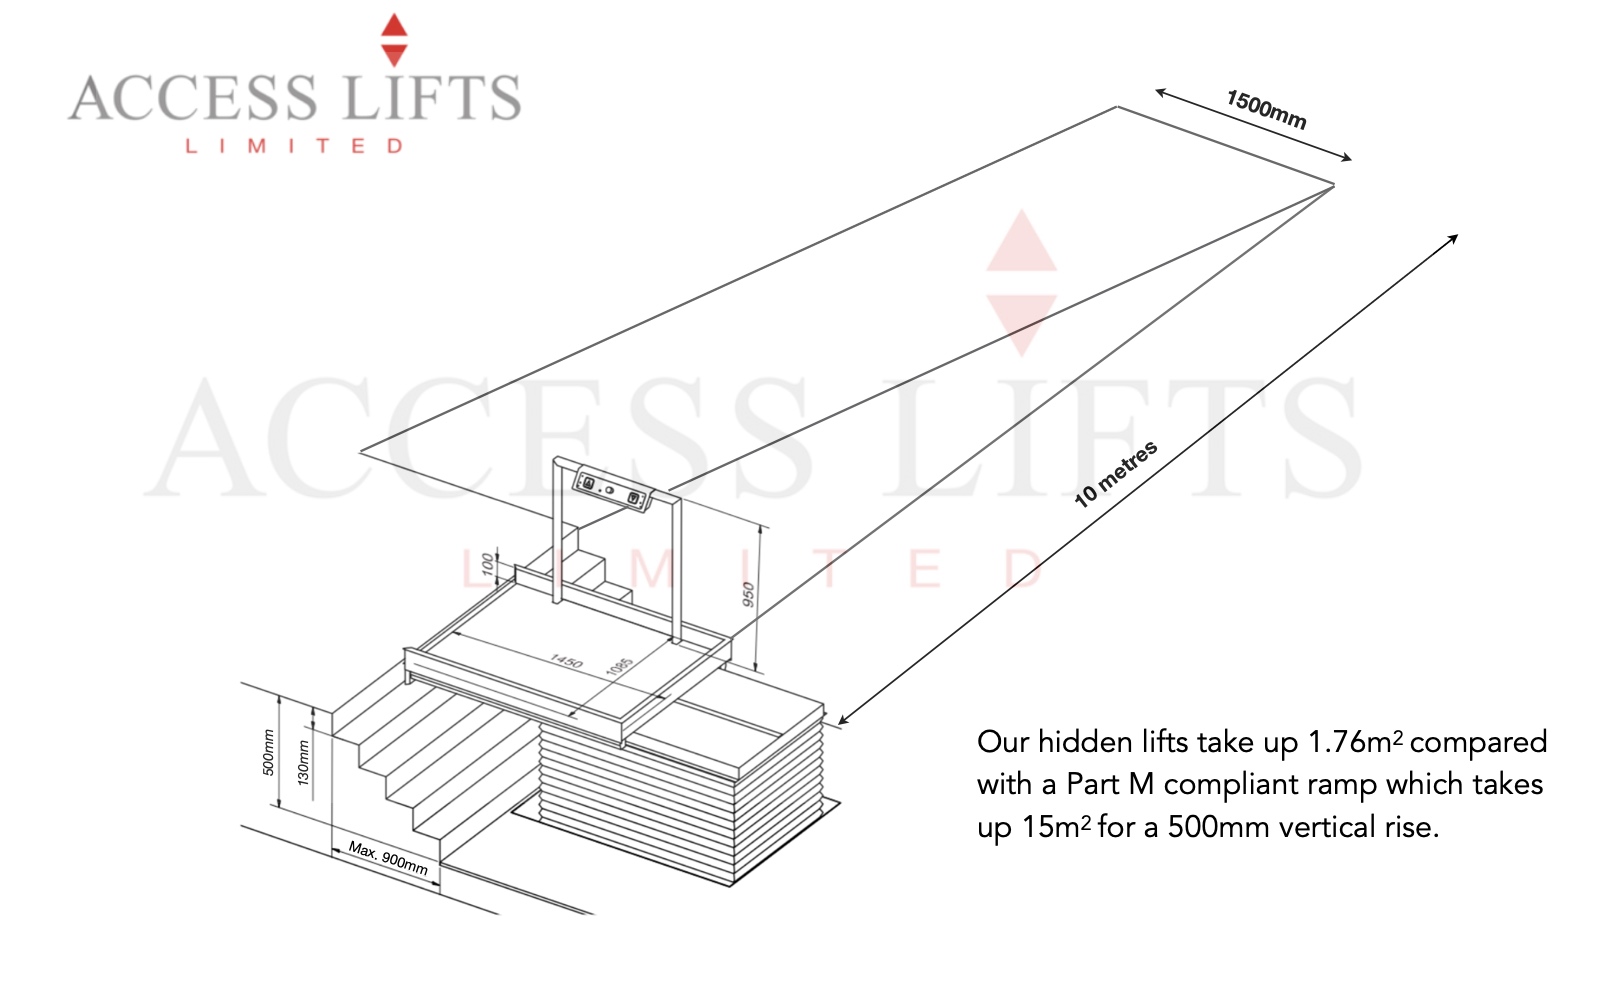 Our hidden platform lift offers an alternative to traditional Part M compliant ramps